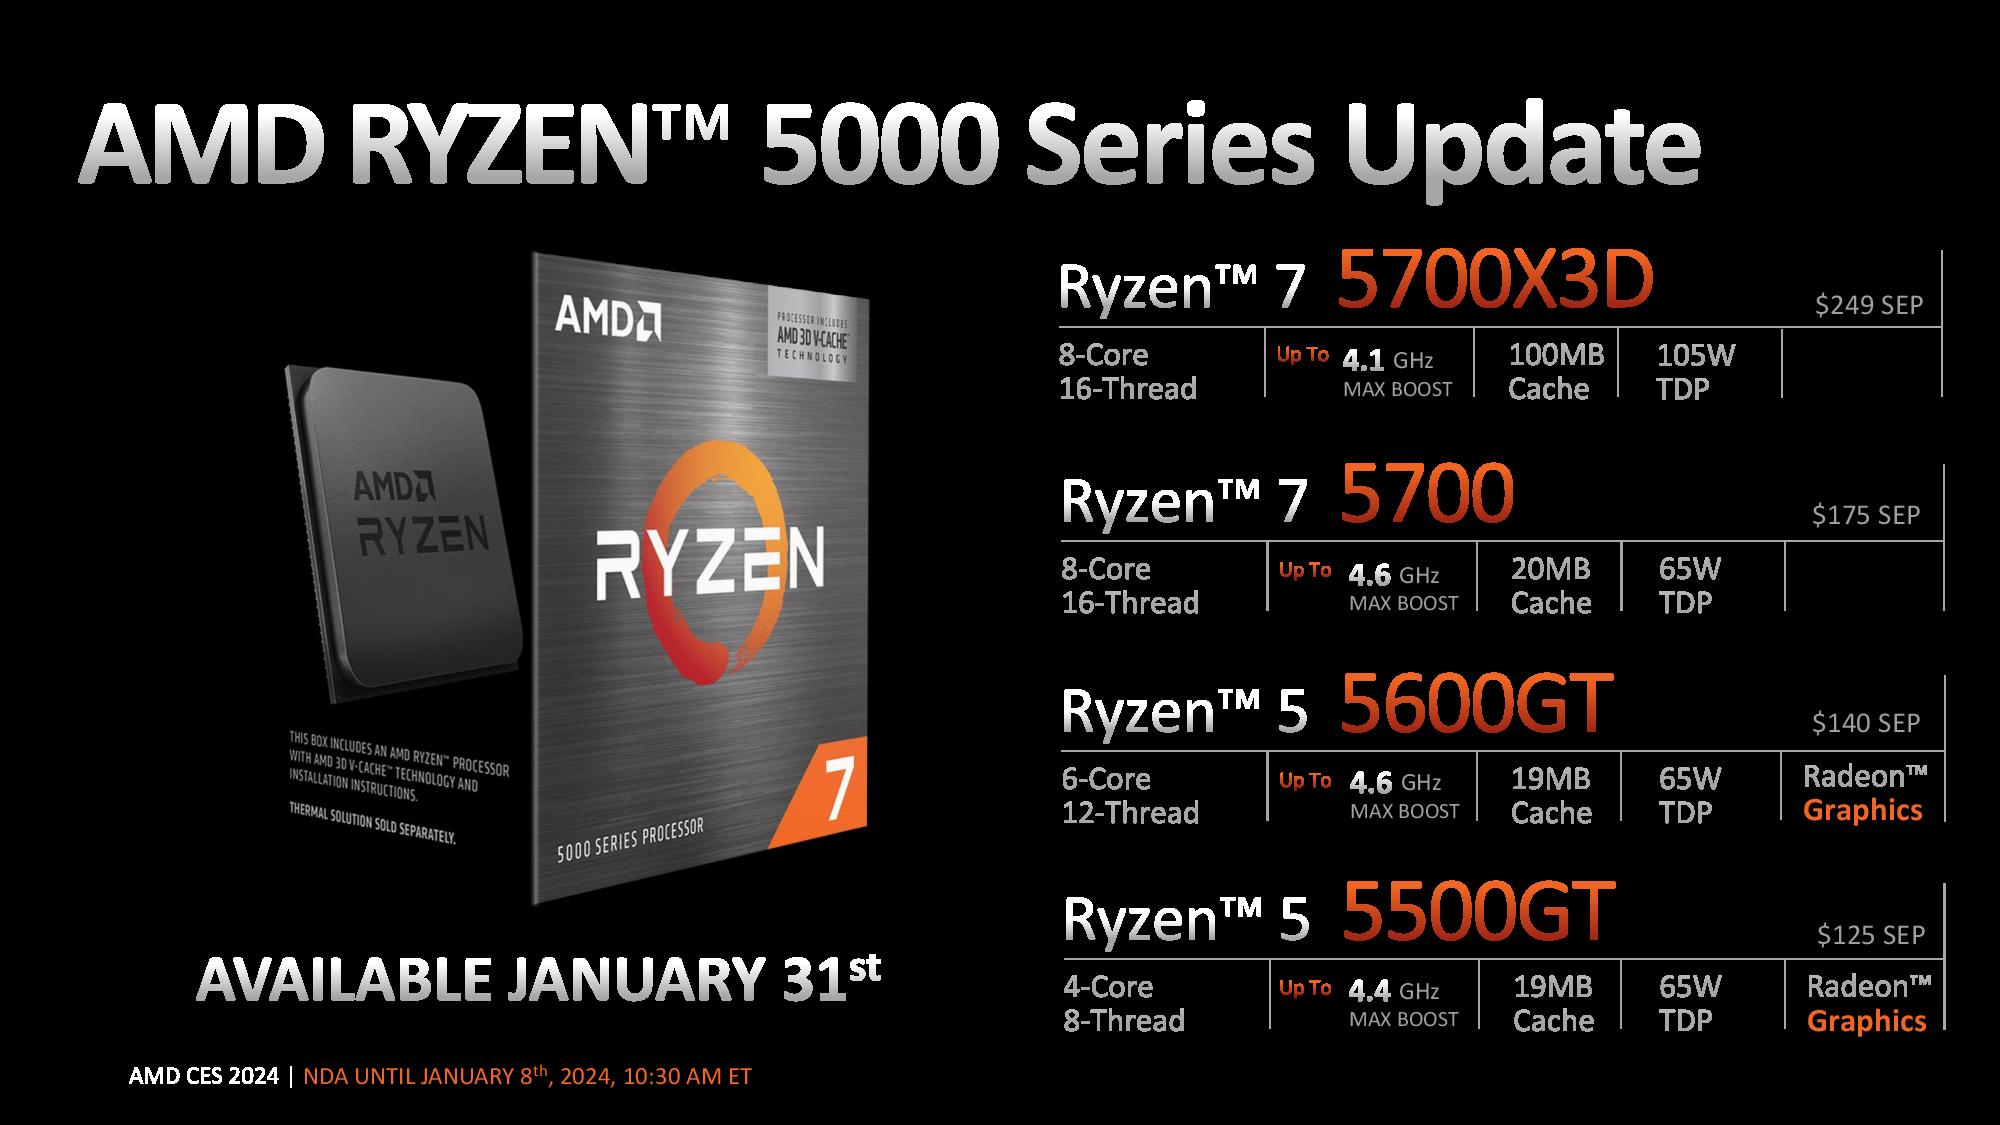 AMD Ryzen 5700X3D